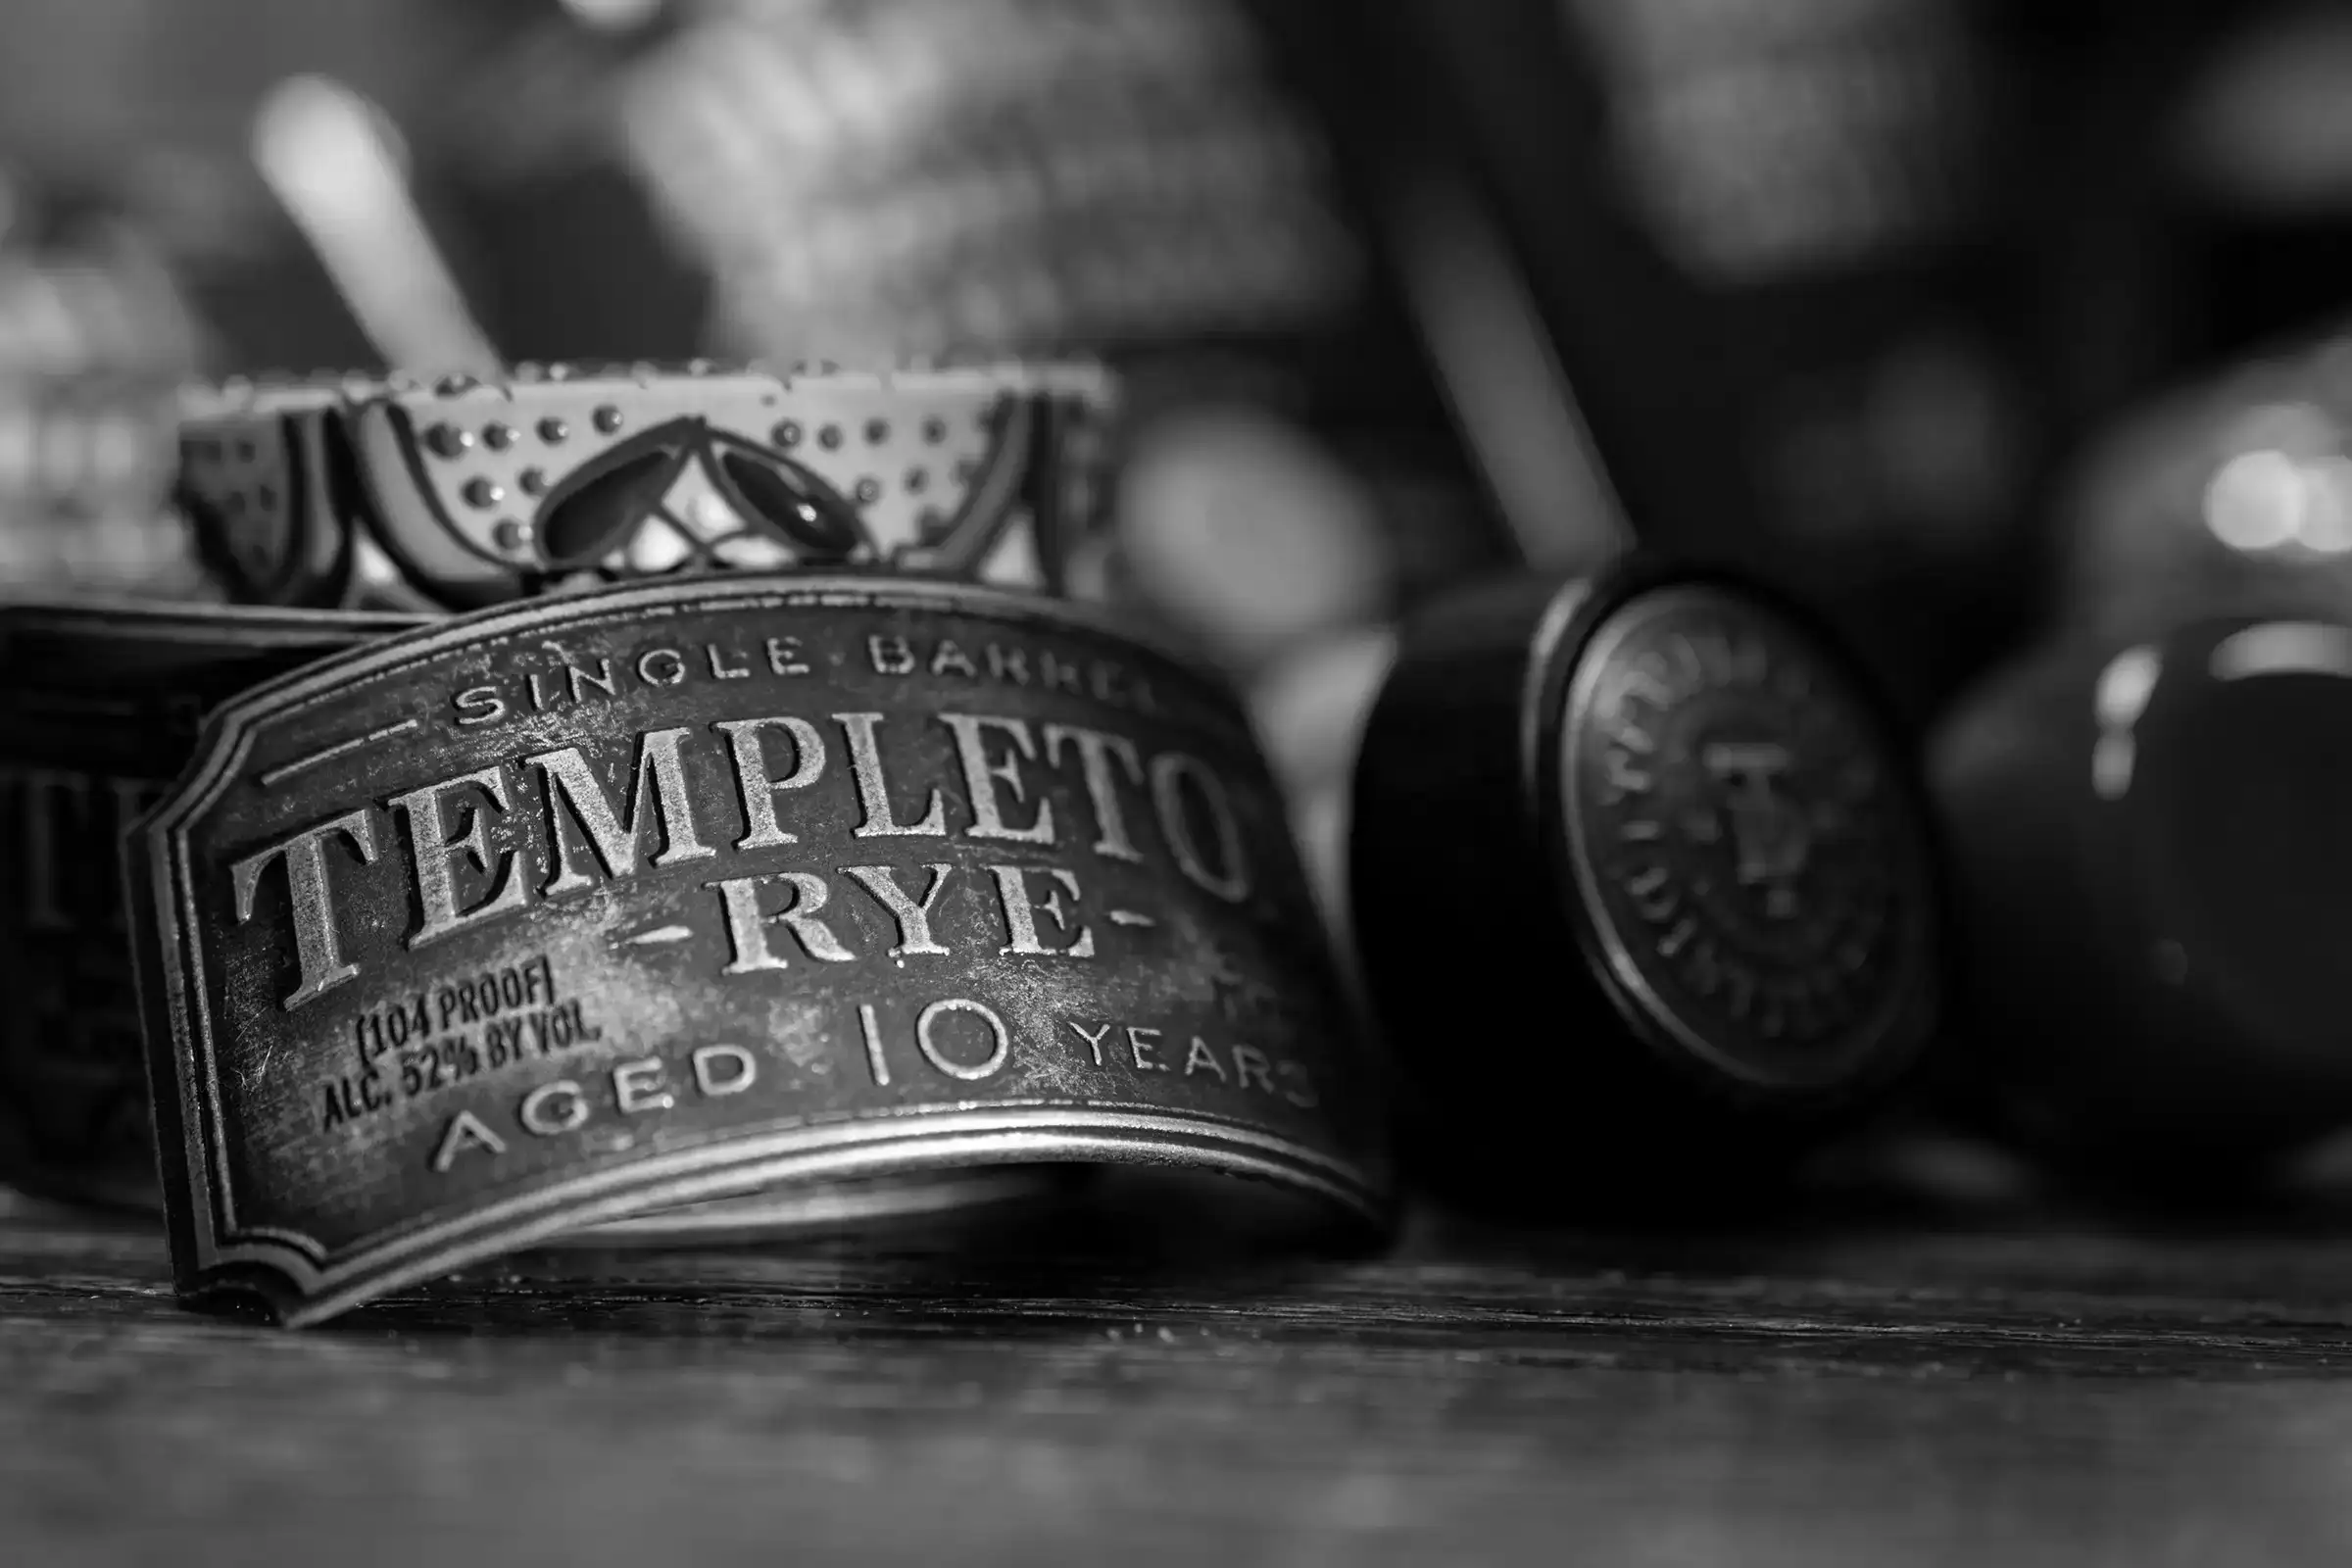 Templeton rye medallion label